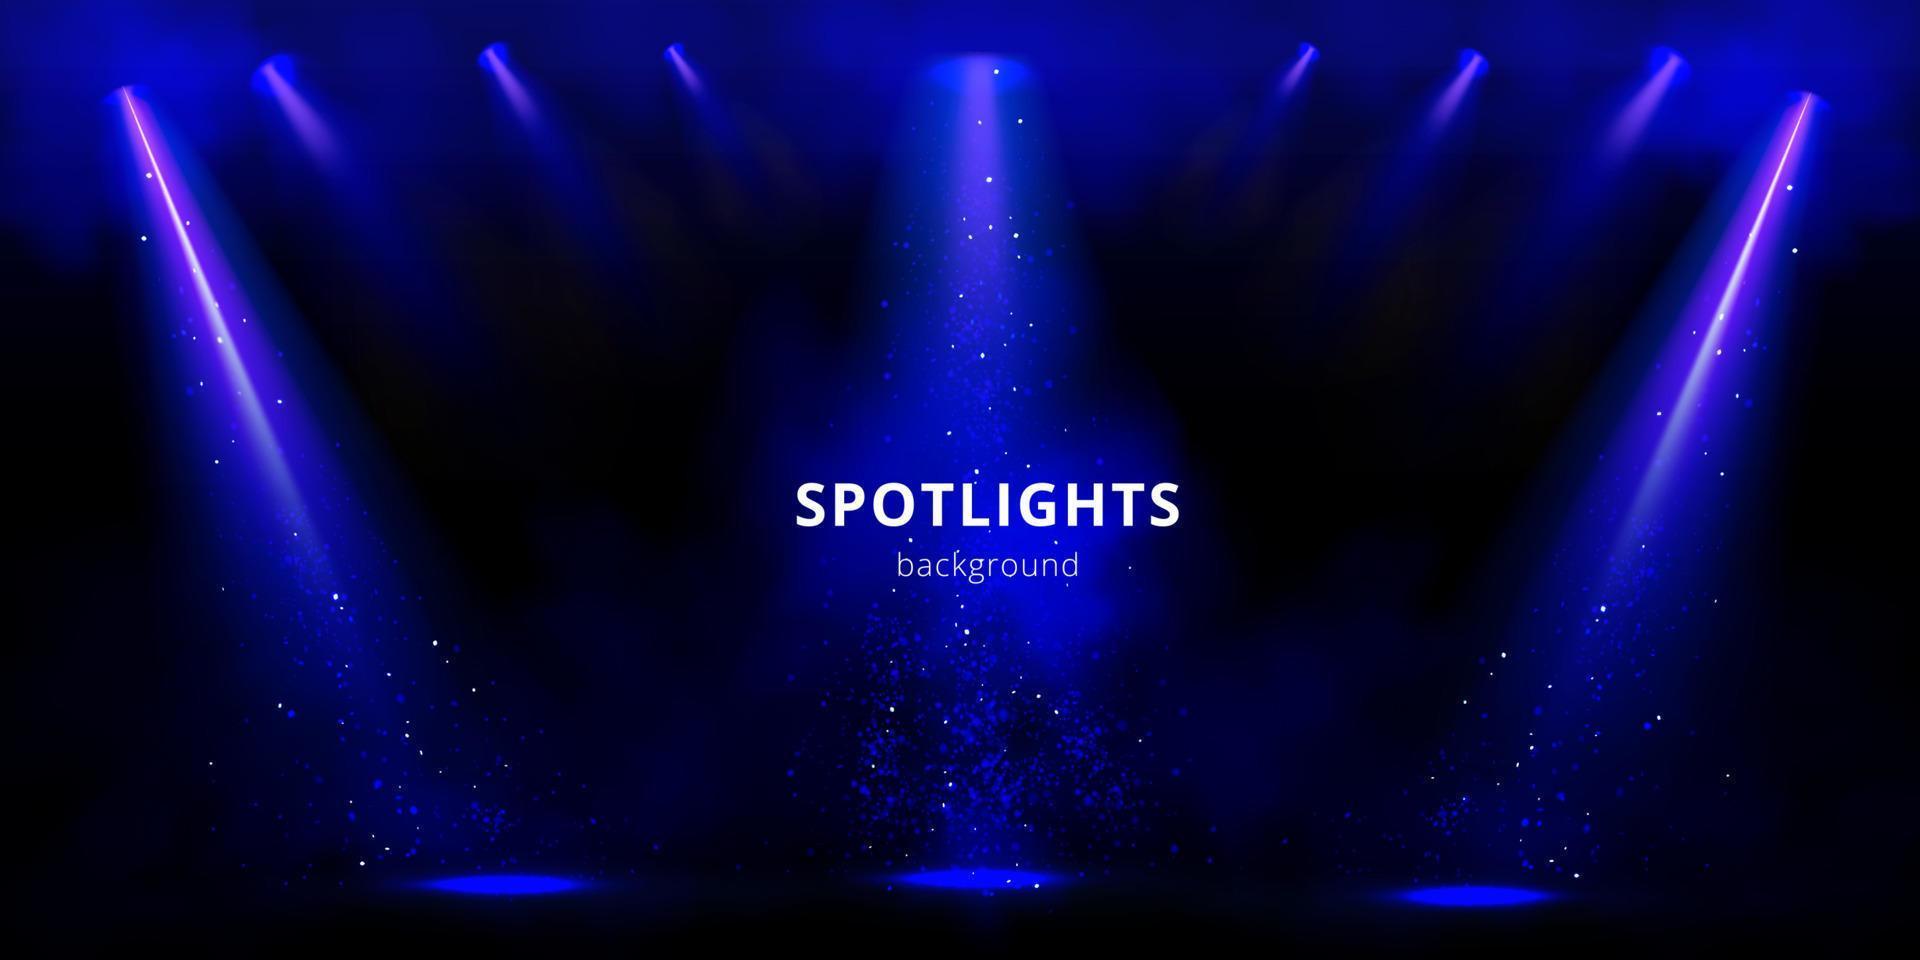 Spotlights background, blue stage light beams vector